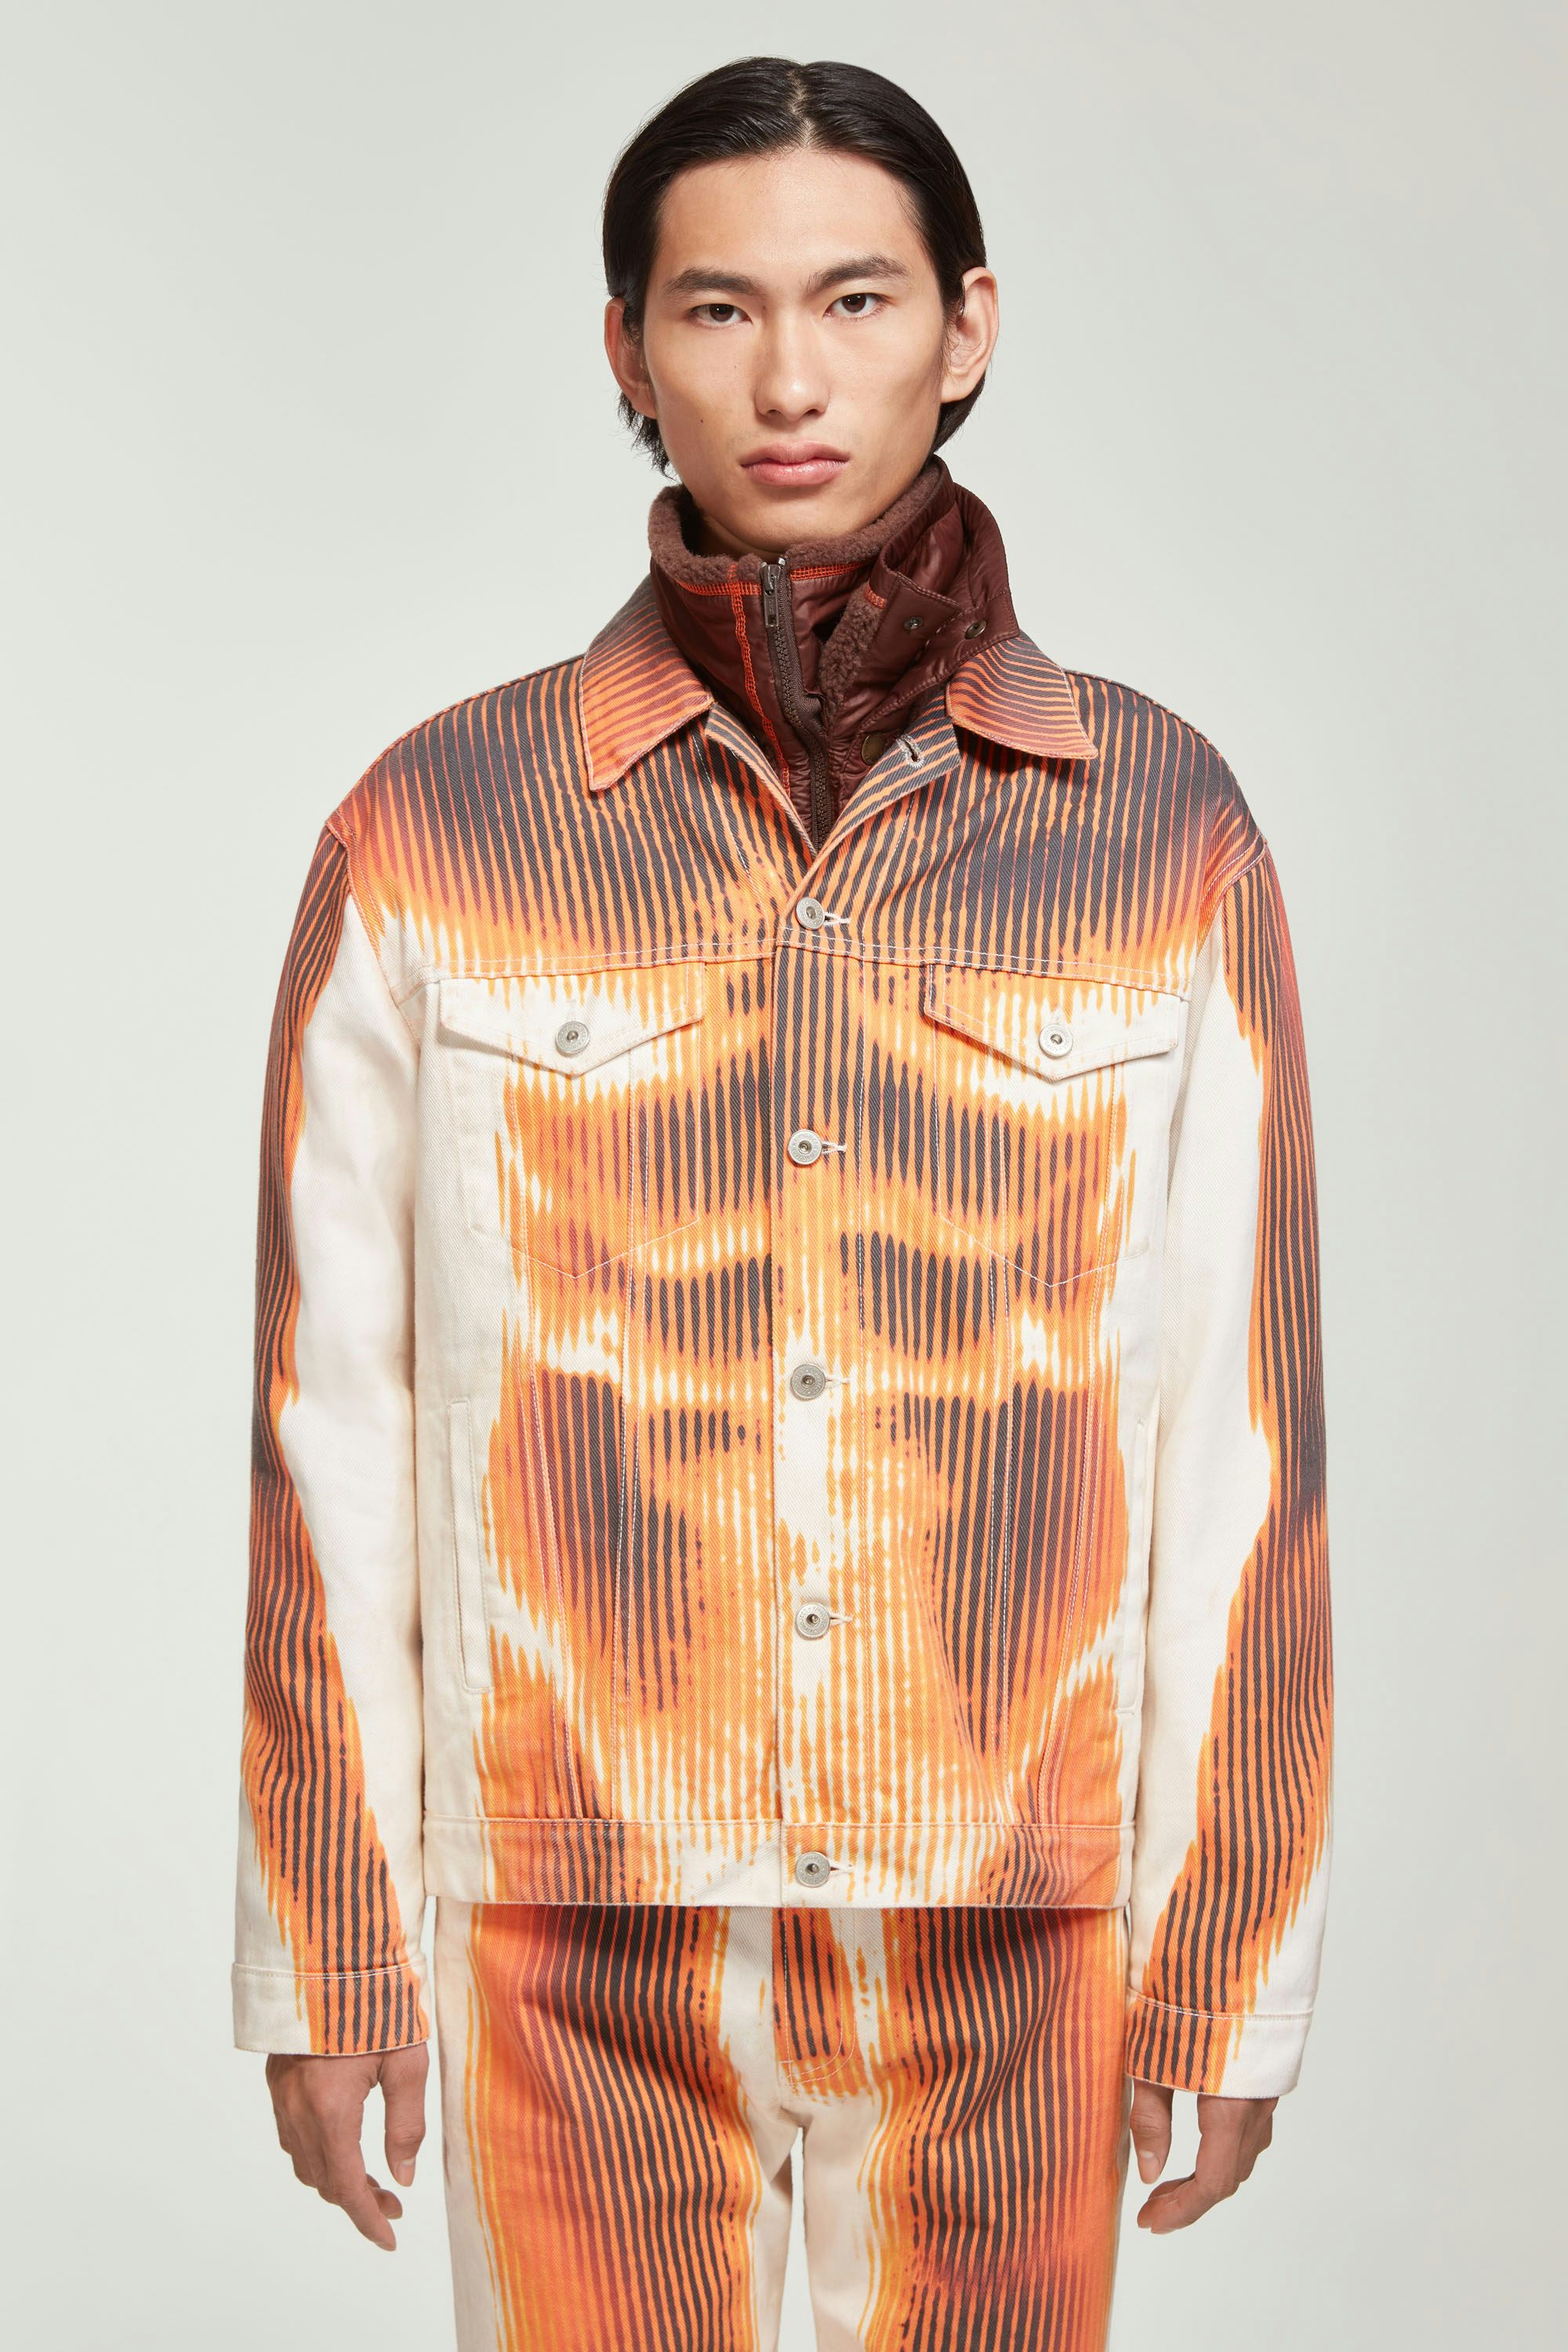 The White & Orange Body Morph Denim Jacket